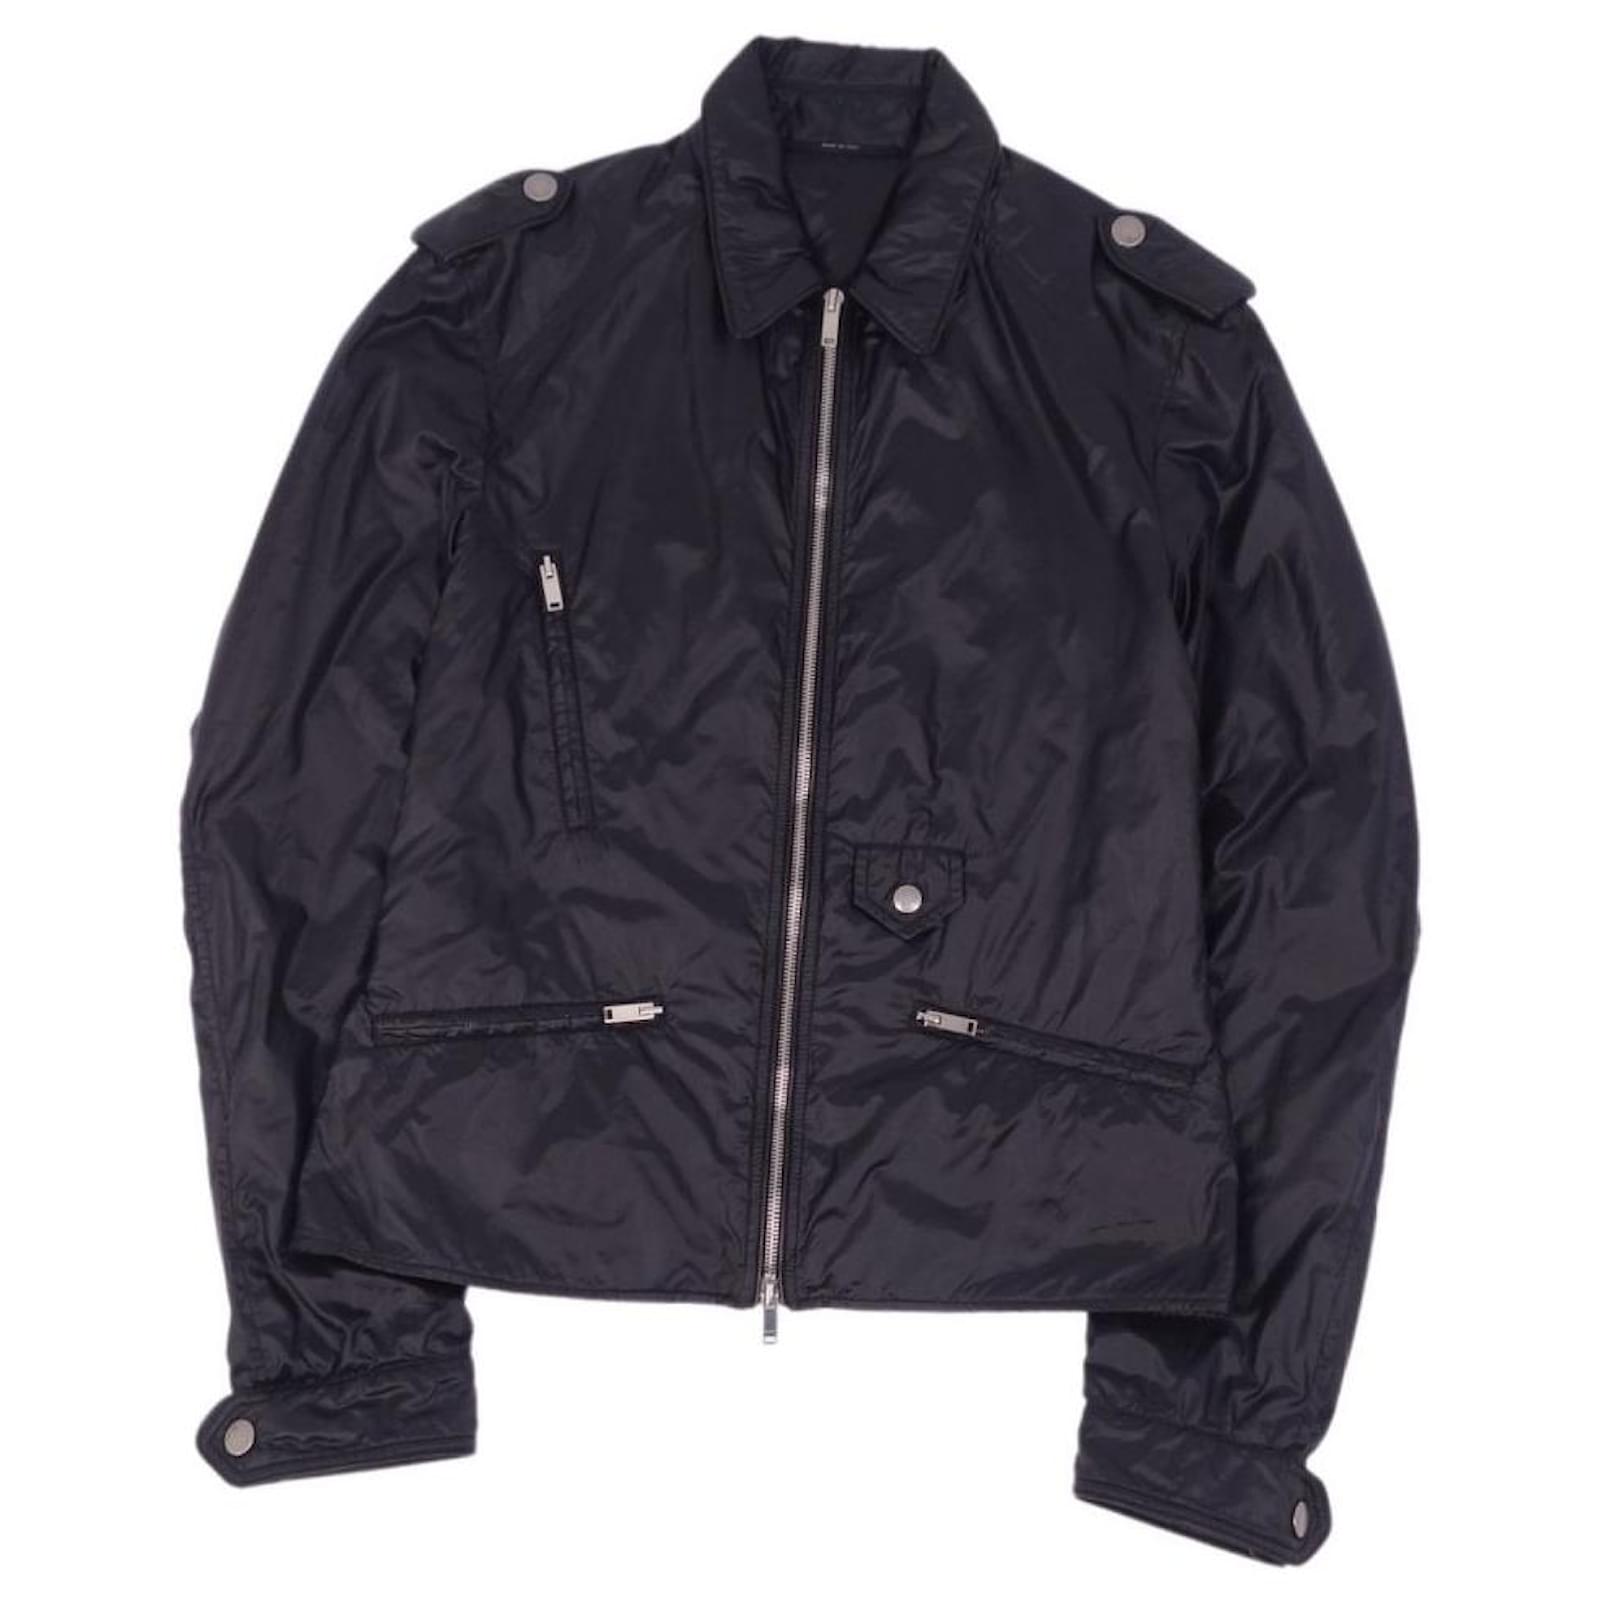 GUCCI Outerwear Men, Black leather bomber jacket Black